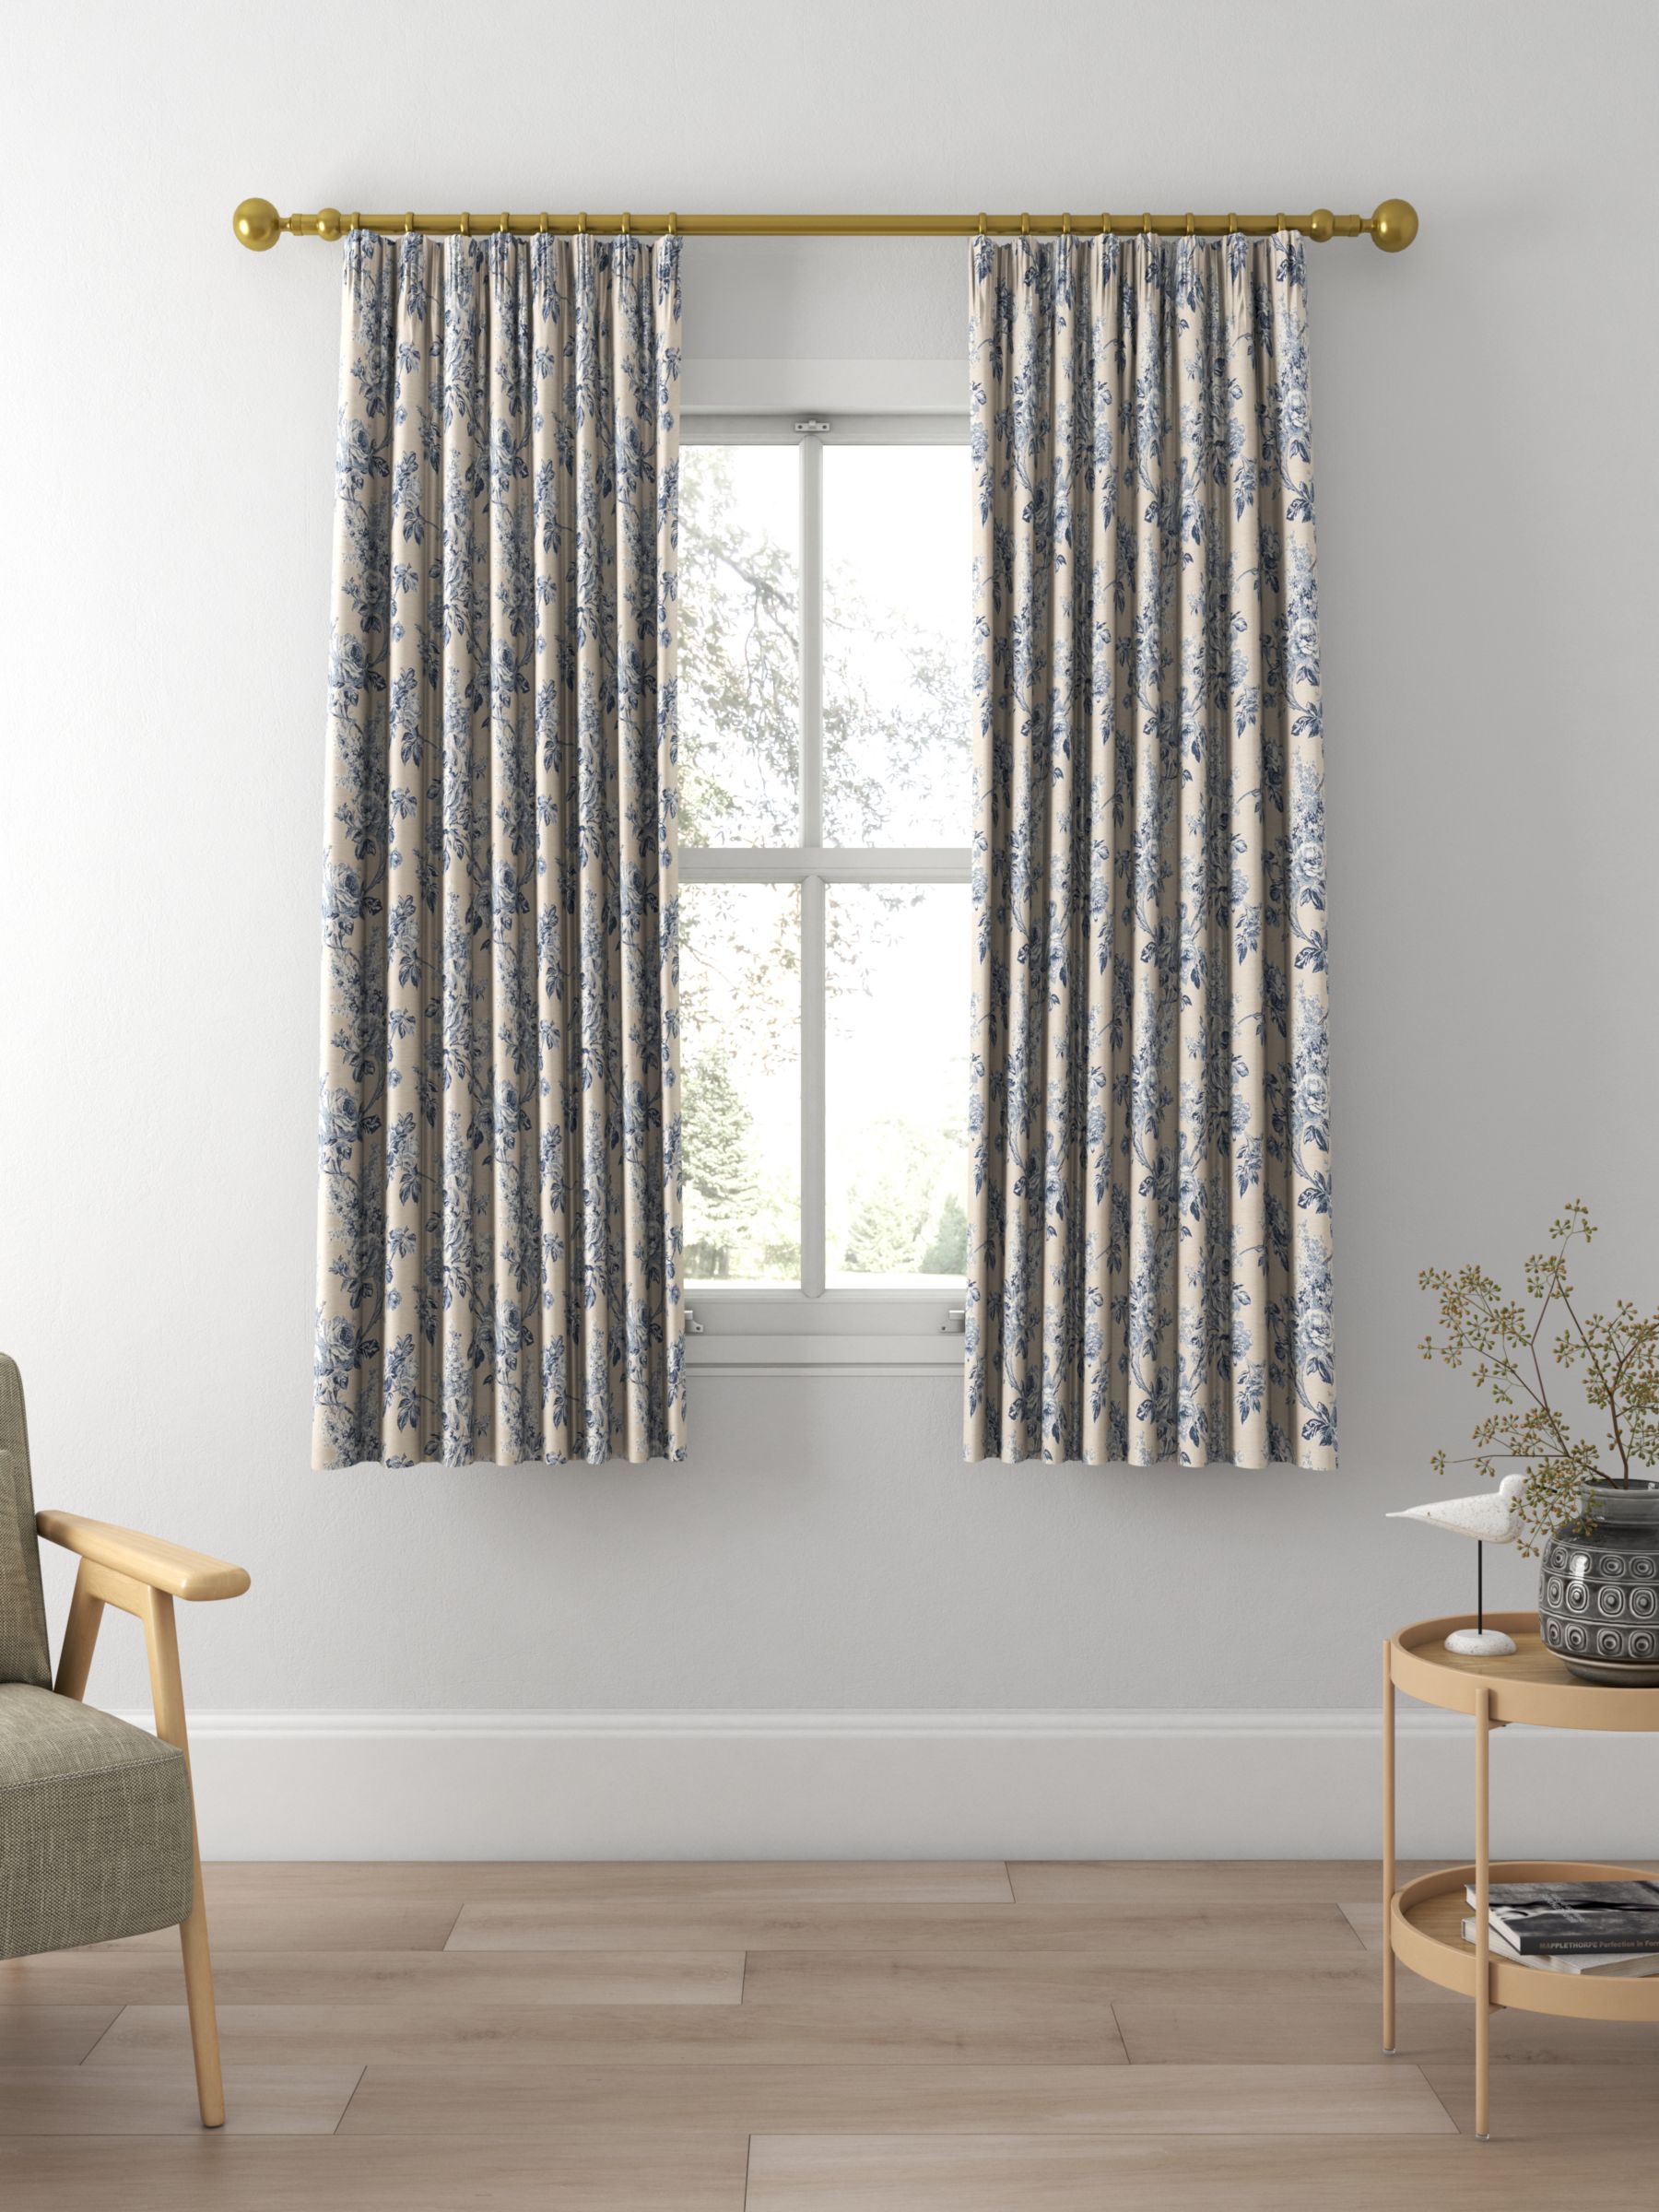 Sanderson Sorilla Damask Made to Measure Curtains, Indigo/Linen